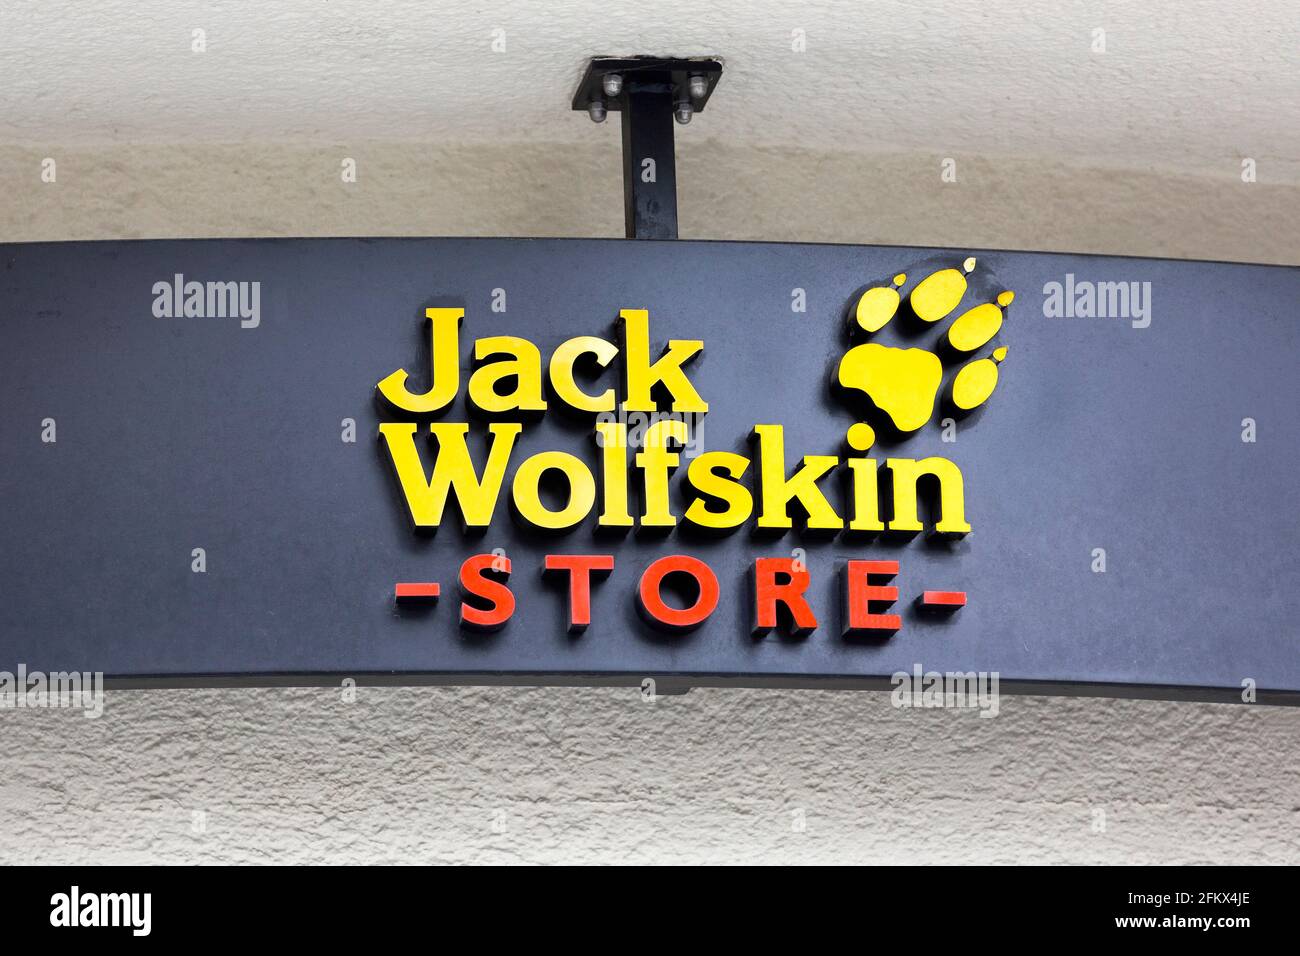 Jack Wolfskin Store Stock Photo